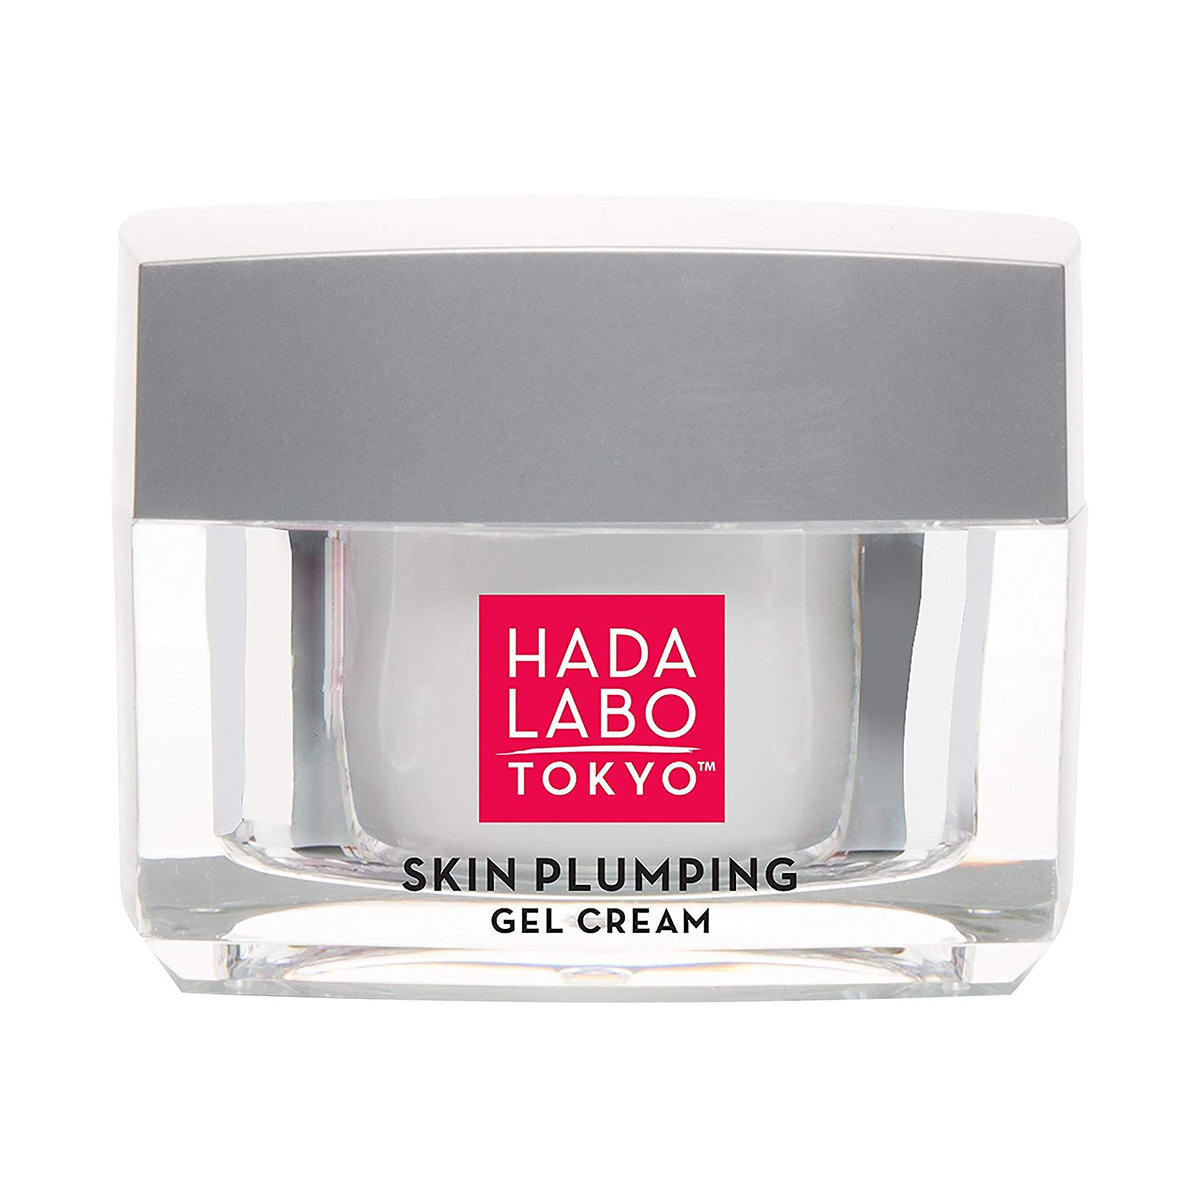 Hada Labo Tokyo skin Plumping Gel Cream